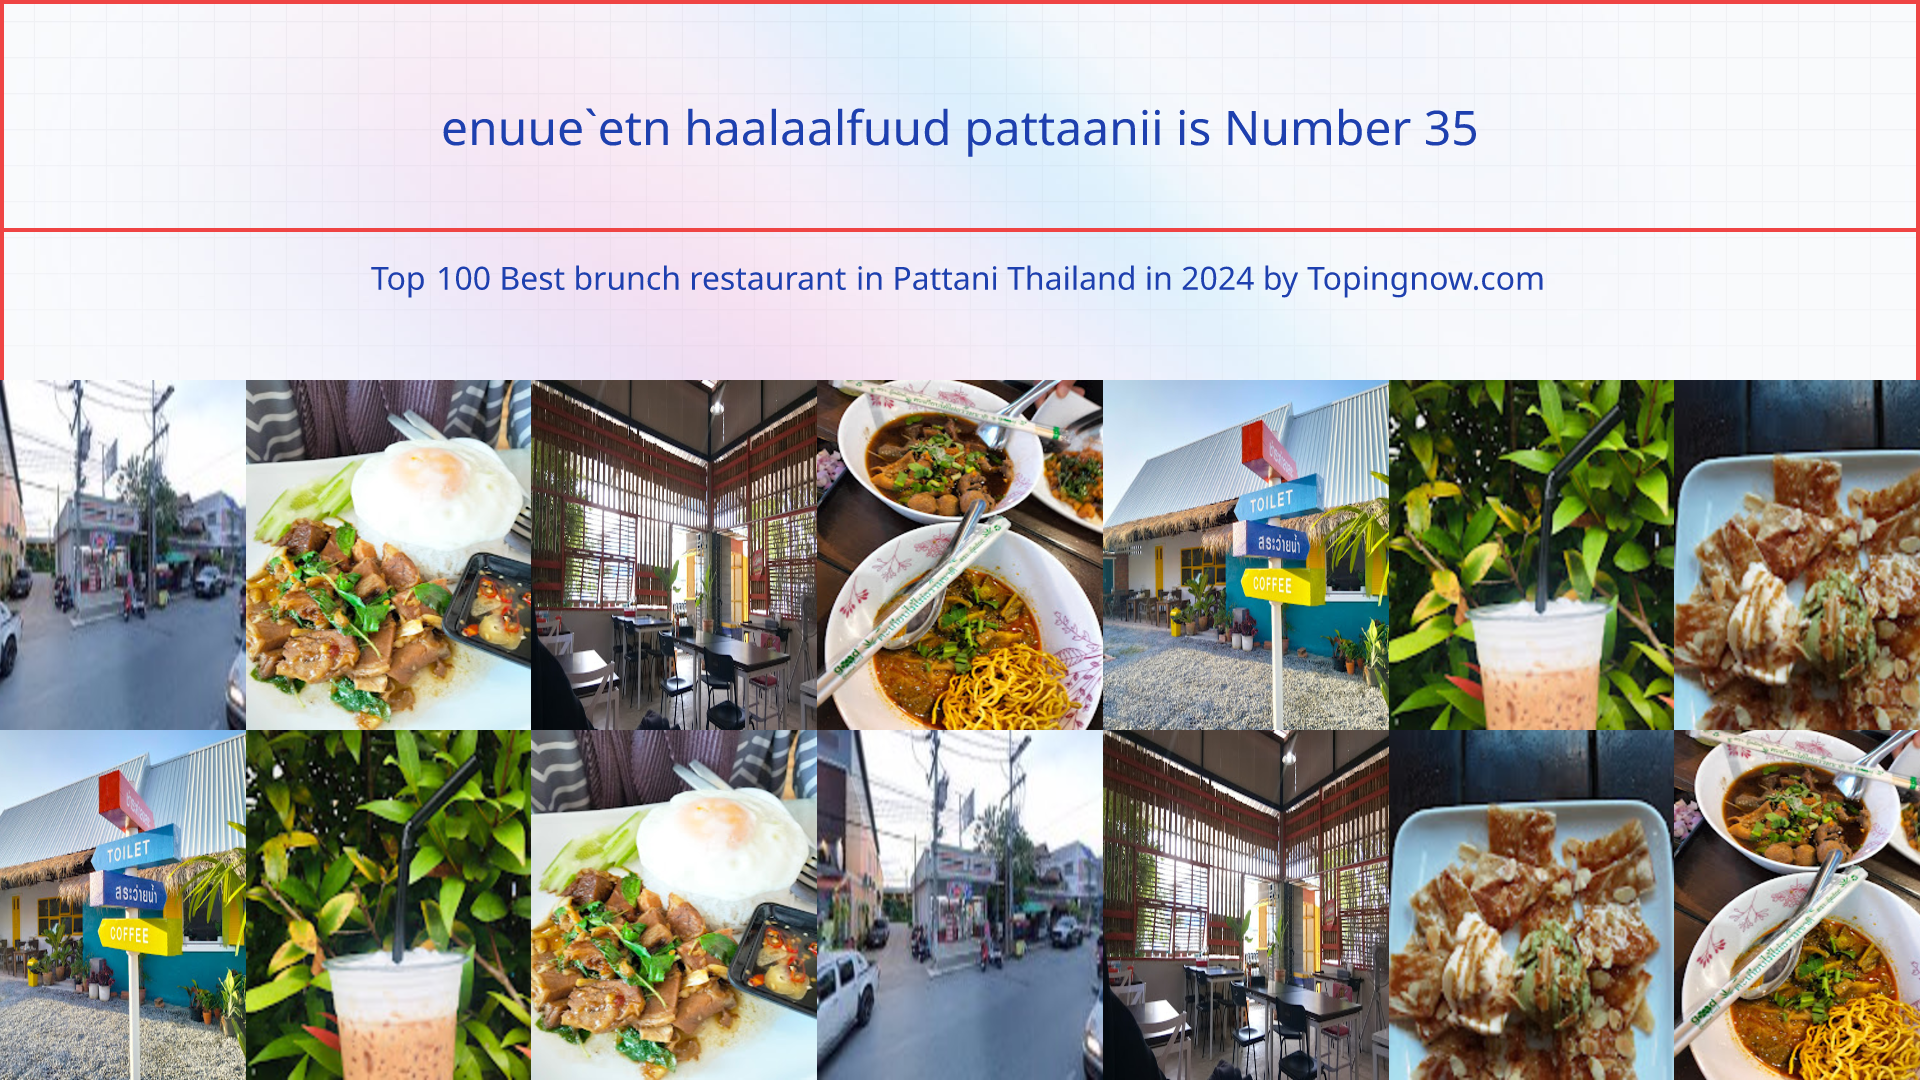 enuue`etn haalaalfuud pattaanii: Top 100 Best brunch restaurant in Pattani Thailand in 2024